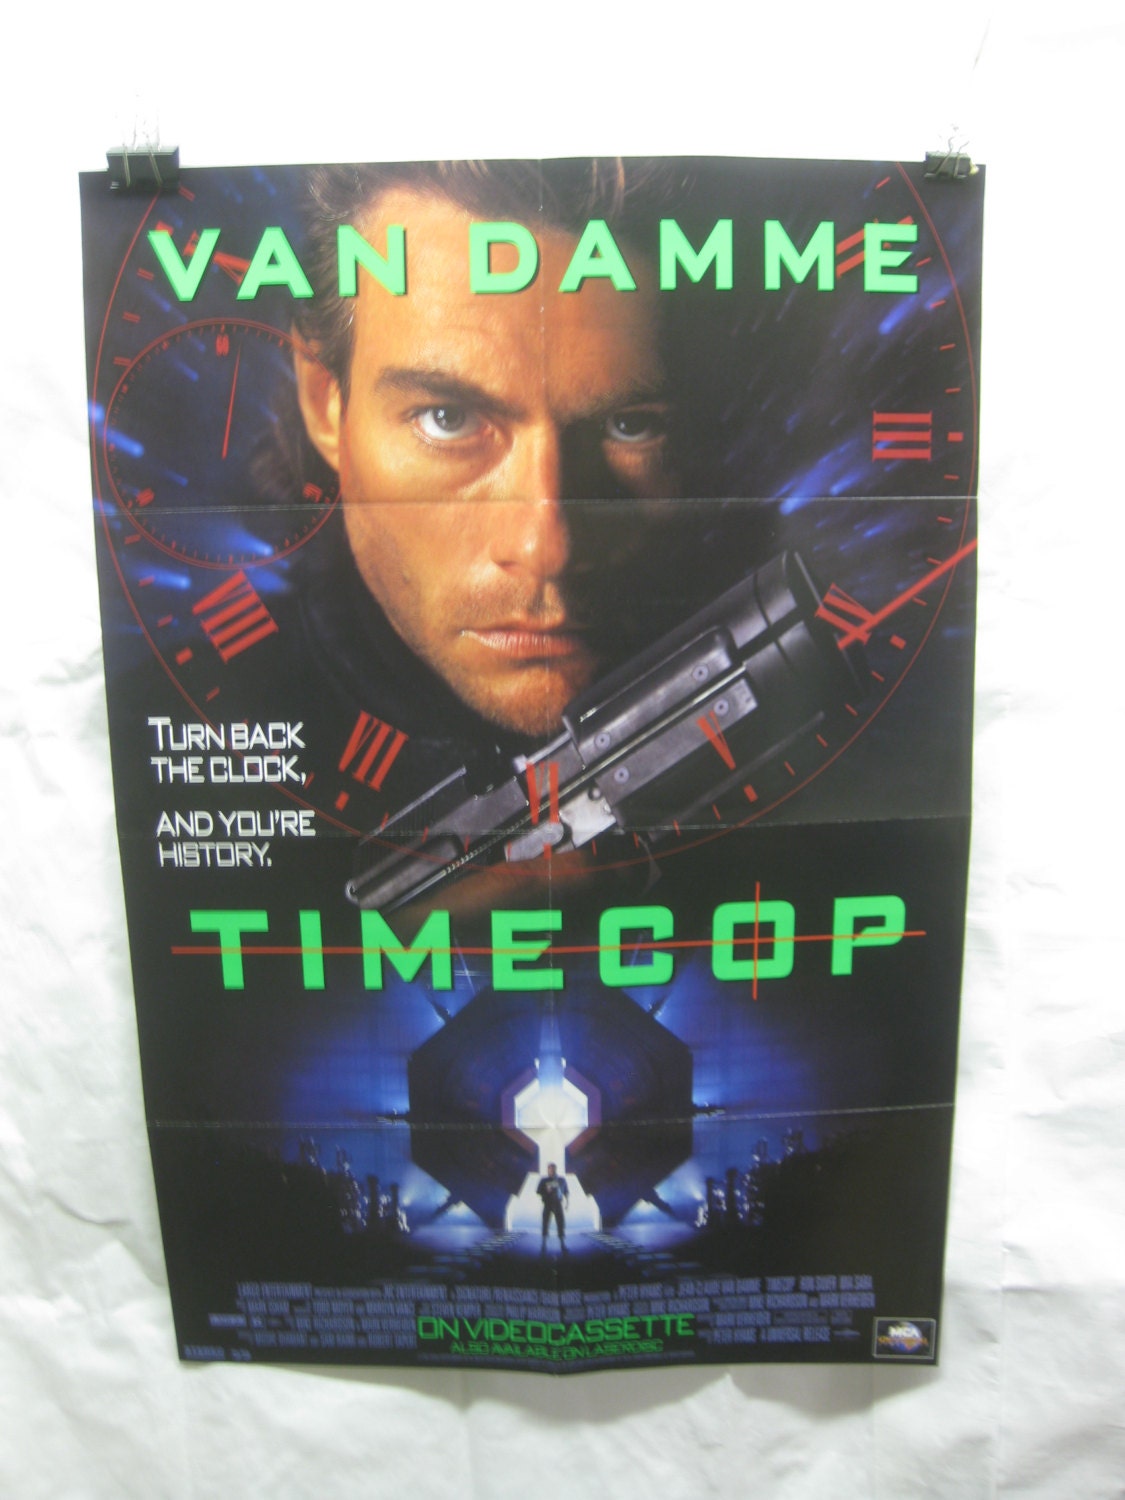 timecop full movie online